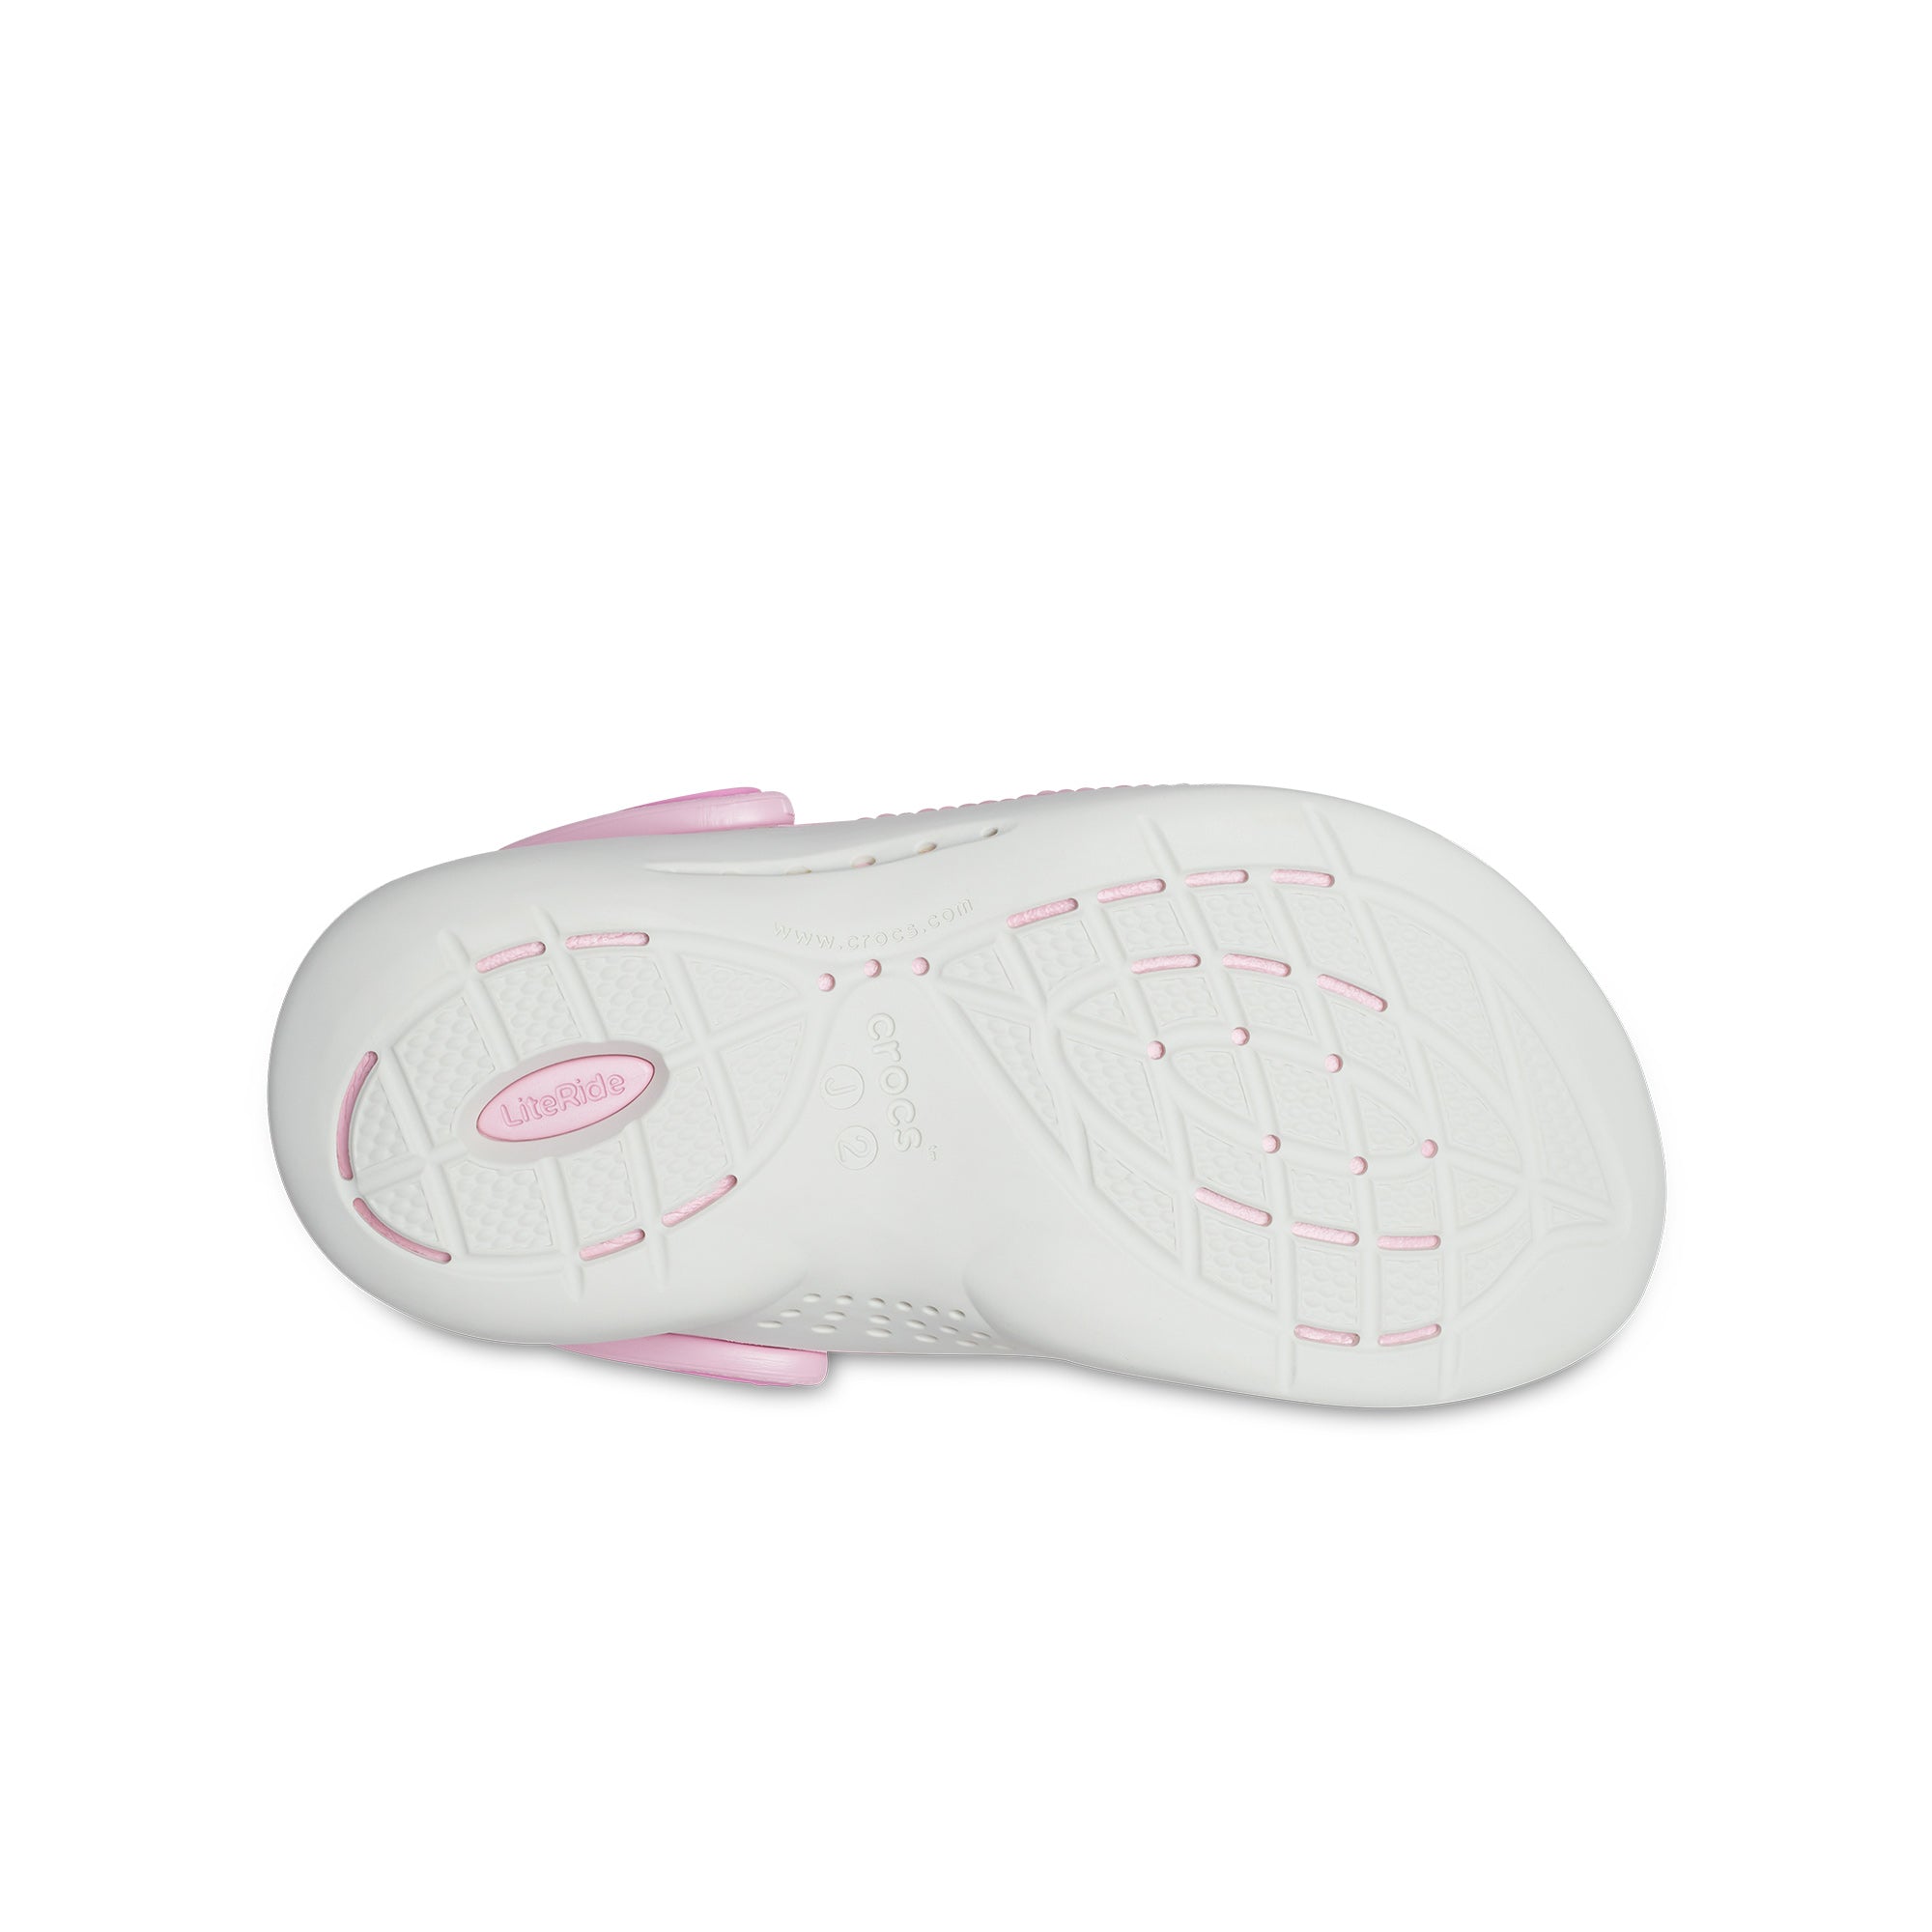 Giày lười clog trẻ em Crocs Literide 360 - 207021-6TL